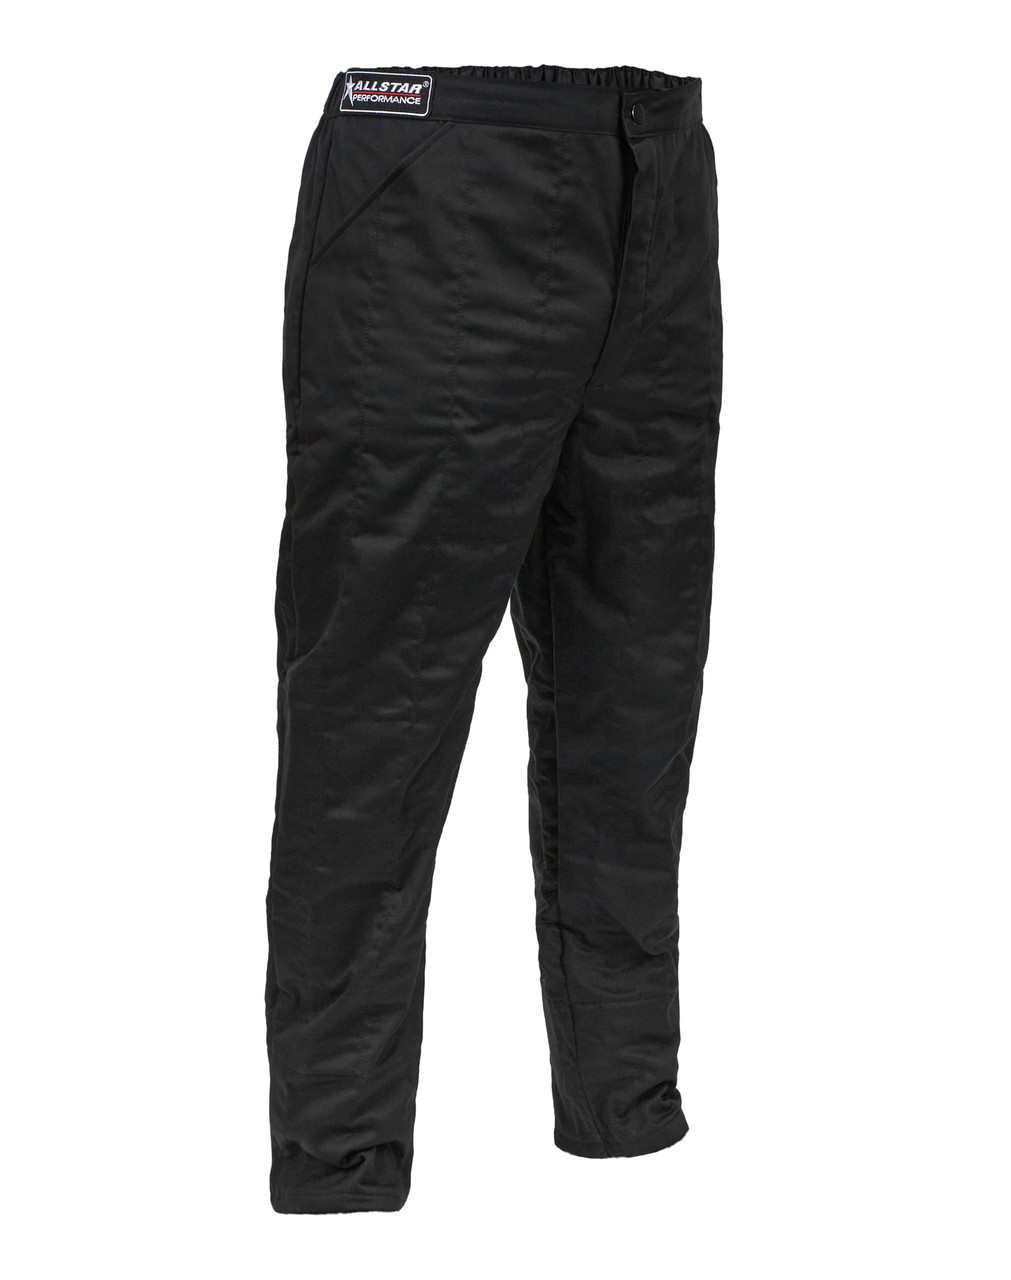 Racing Pants SFI 3.2A/5 M/L Black Large